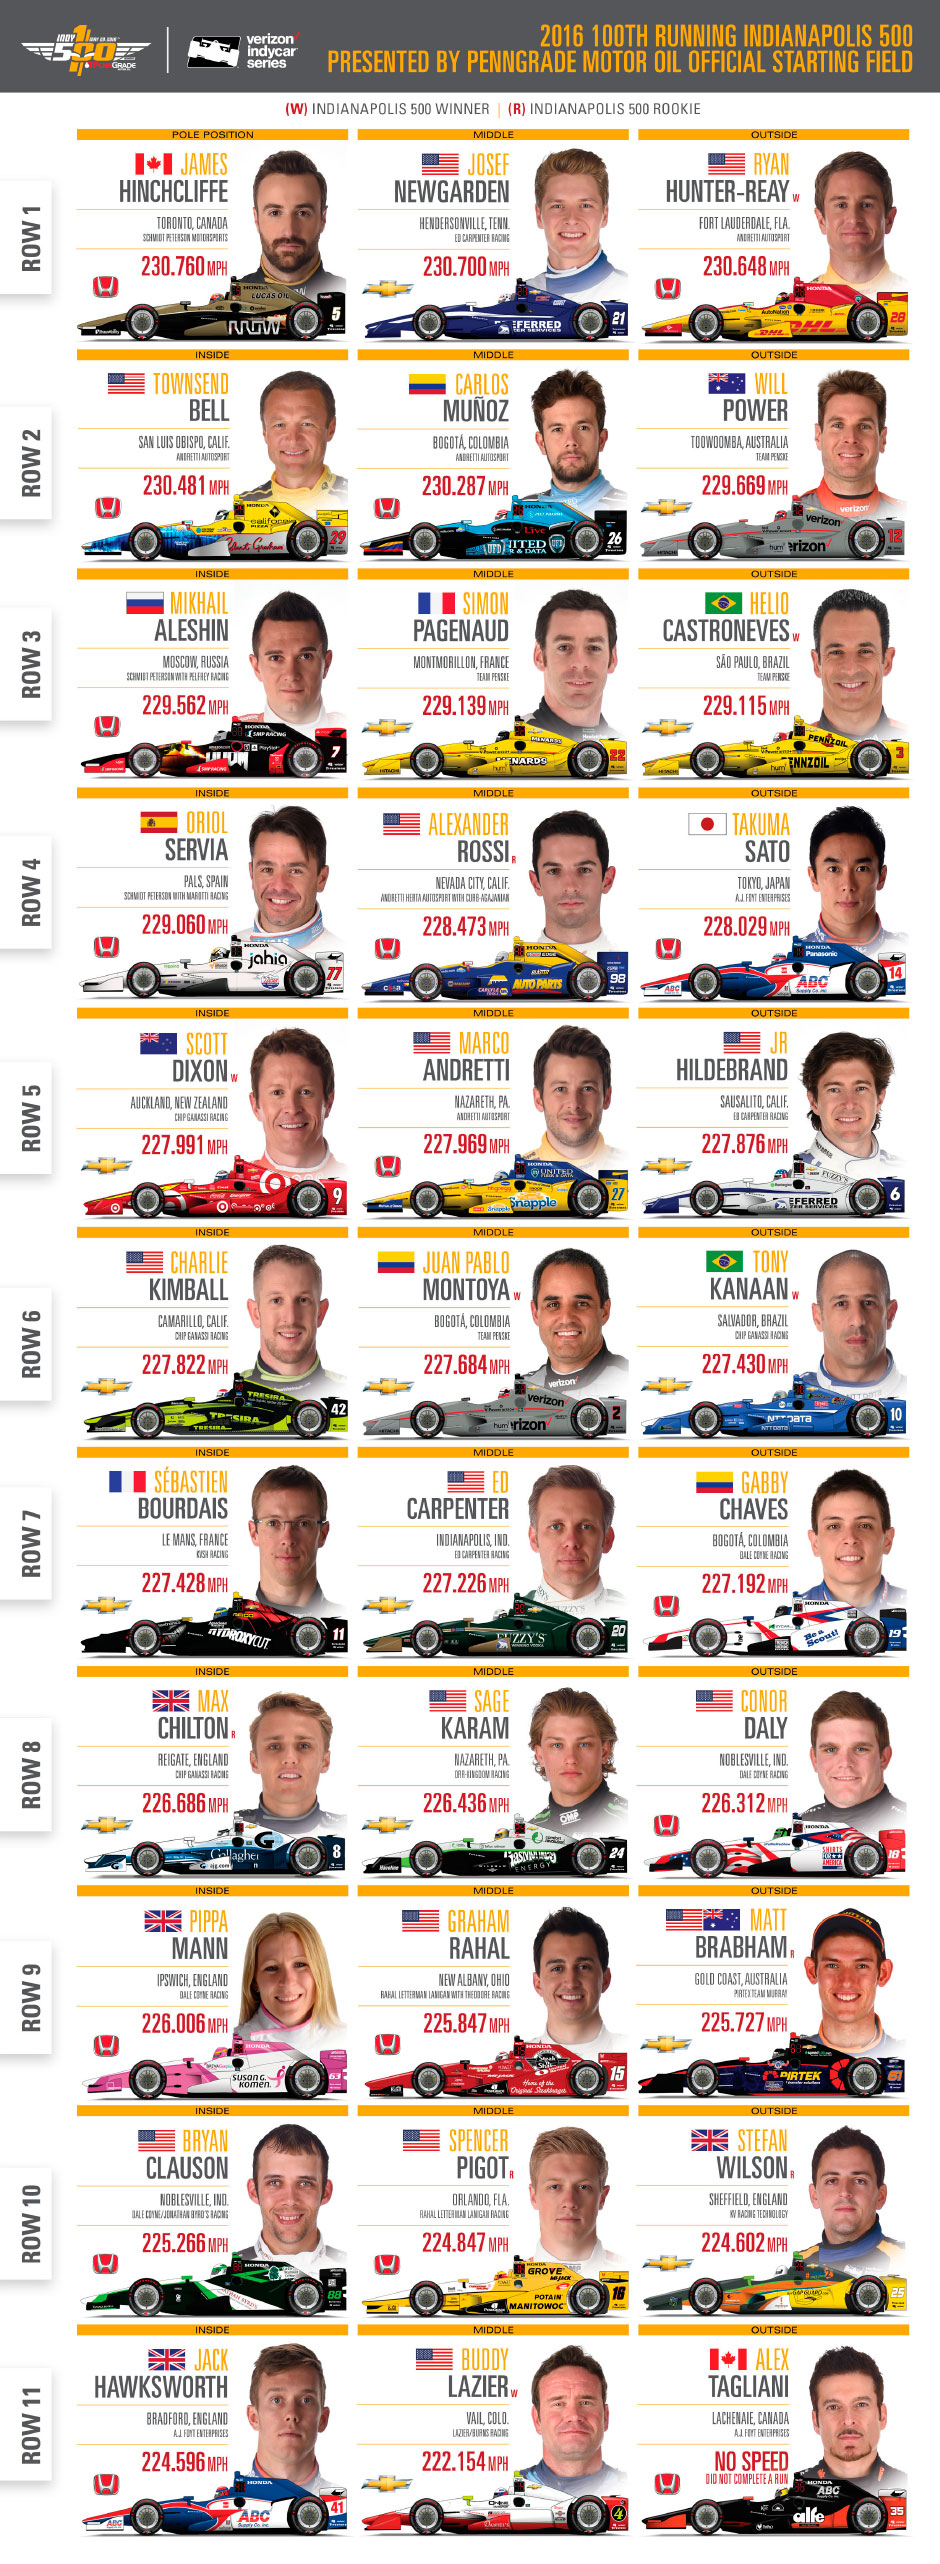 Starting Lineup - 2016 Indianapolis 500